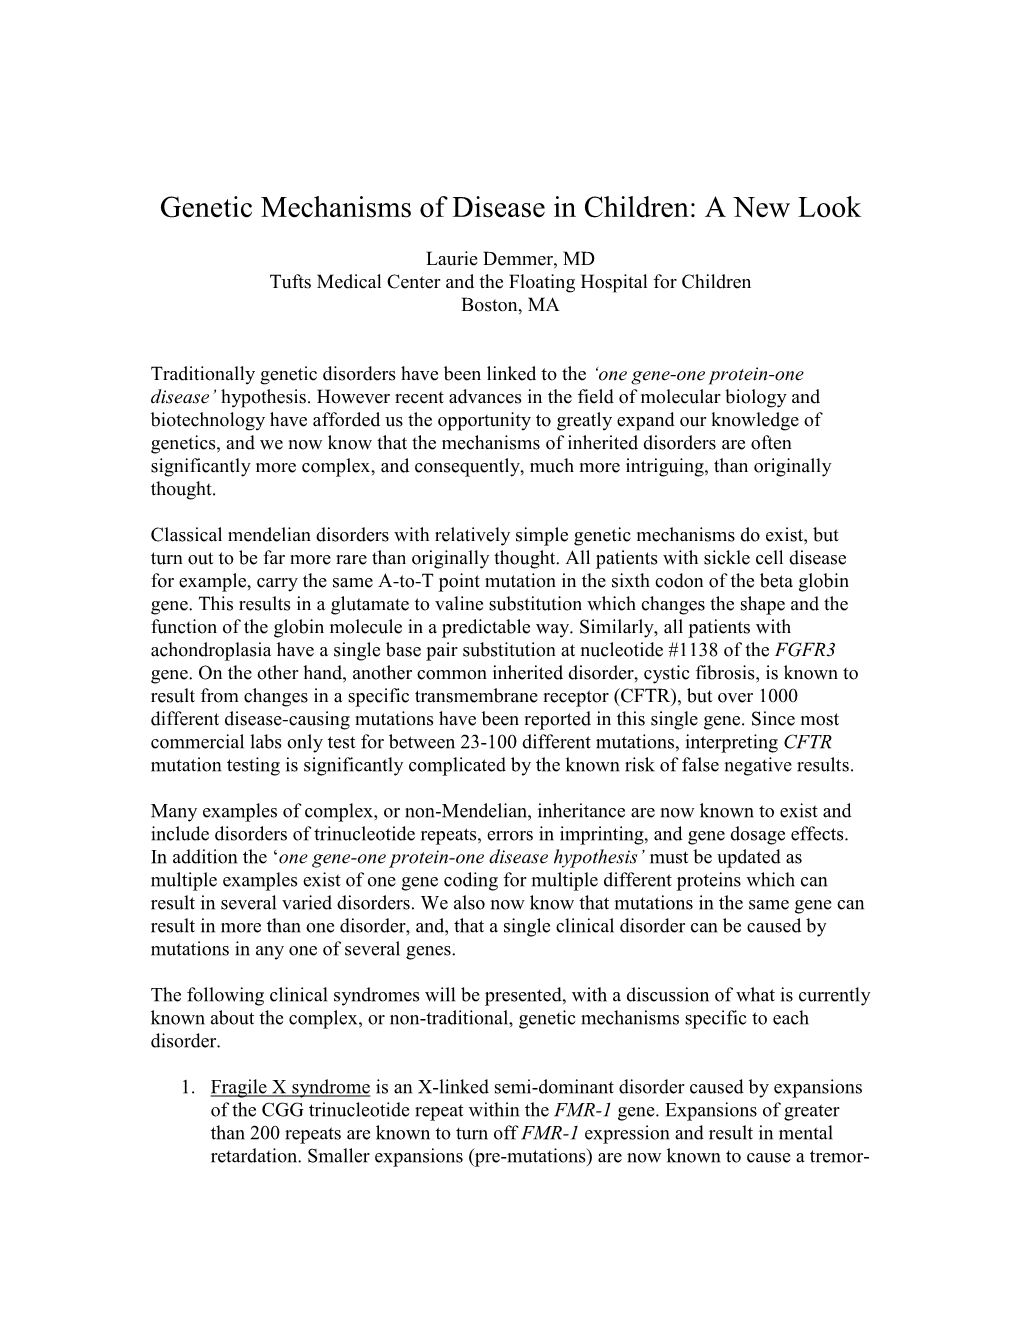 Genetic Mechanisms of Disease in Children: a New Look